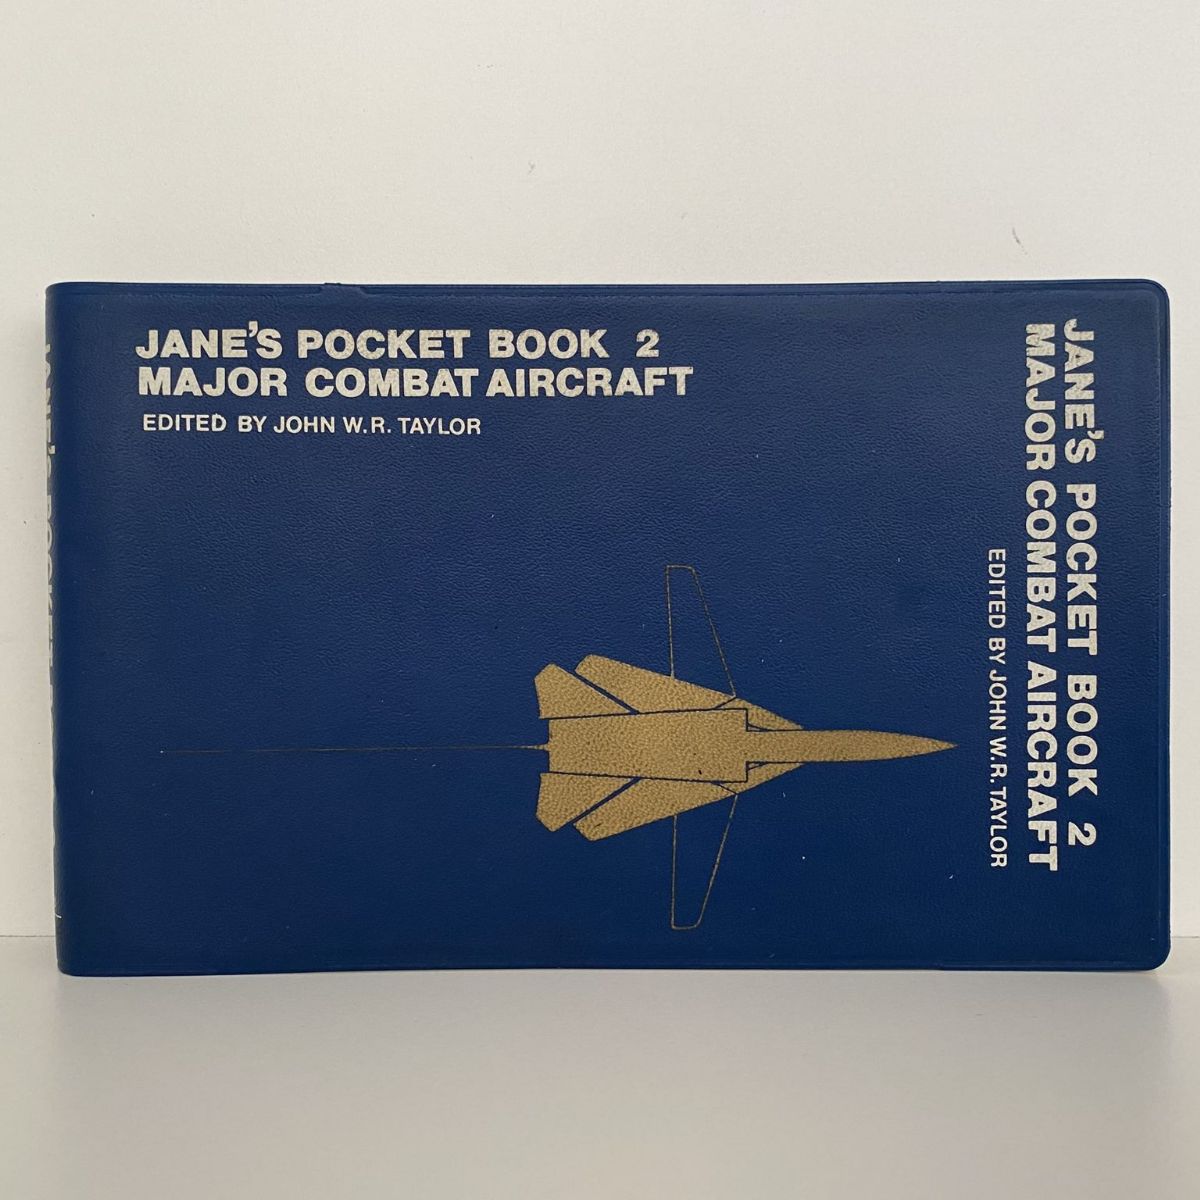 Jane's Pocket Book 2: MAJOR COMBAT AIRCRAFT